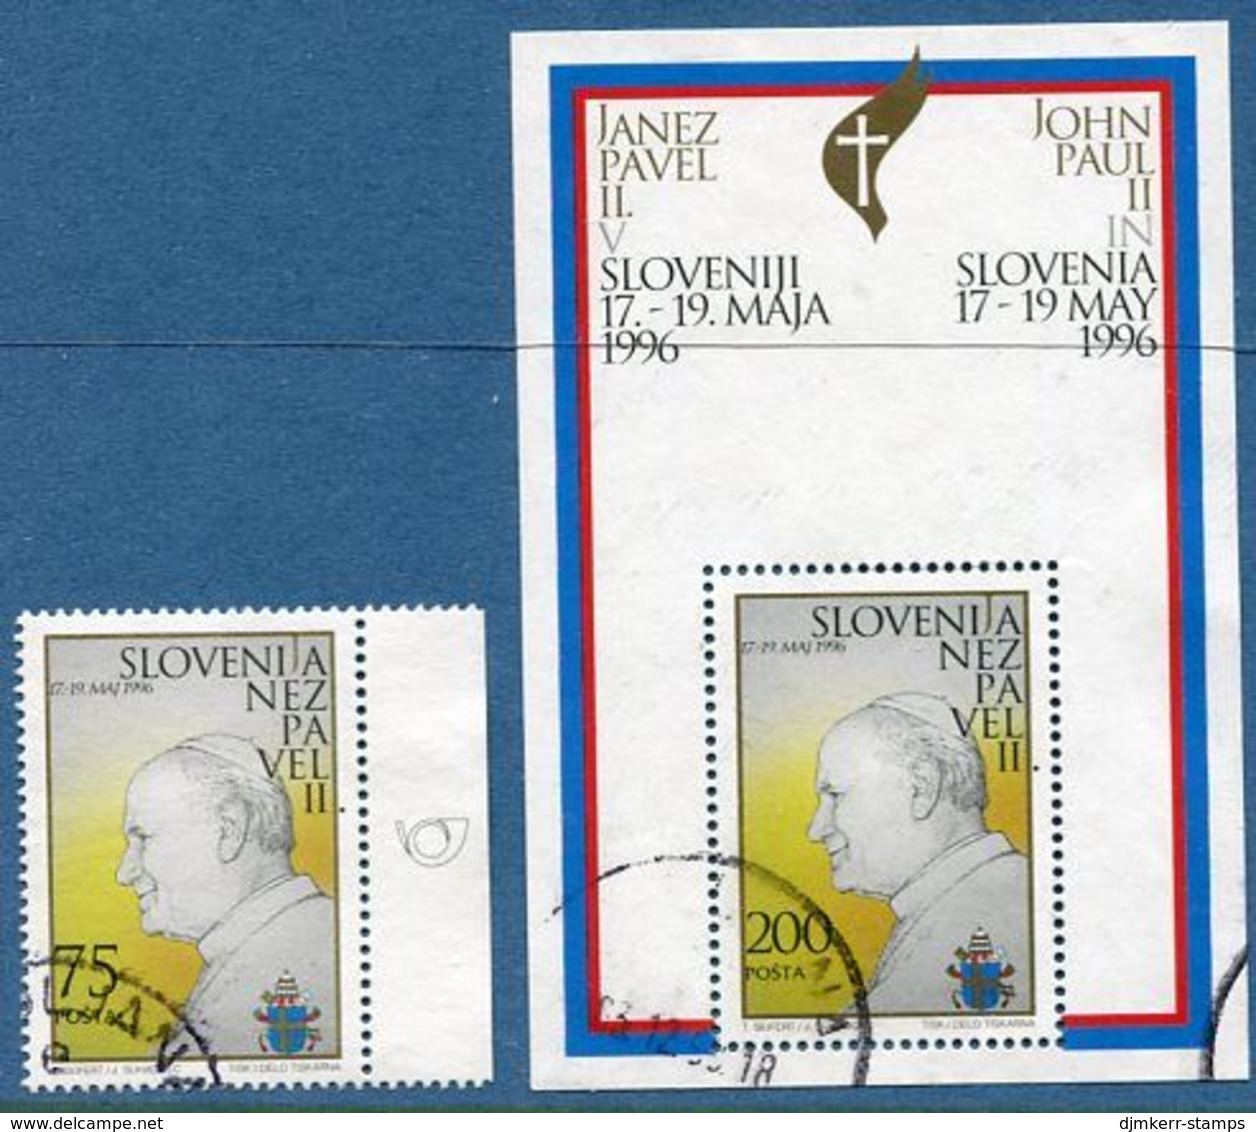 SLOVENIA 1996 Papal Visit Stamp And Block Used..  Michel 144 + Block 2 - Slovénie